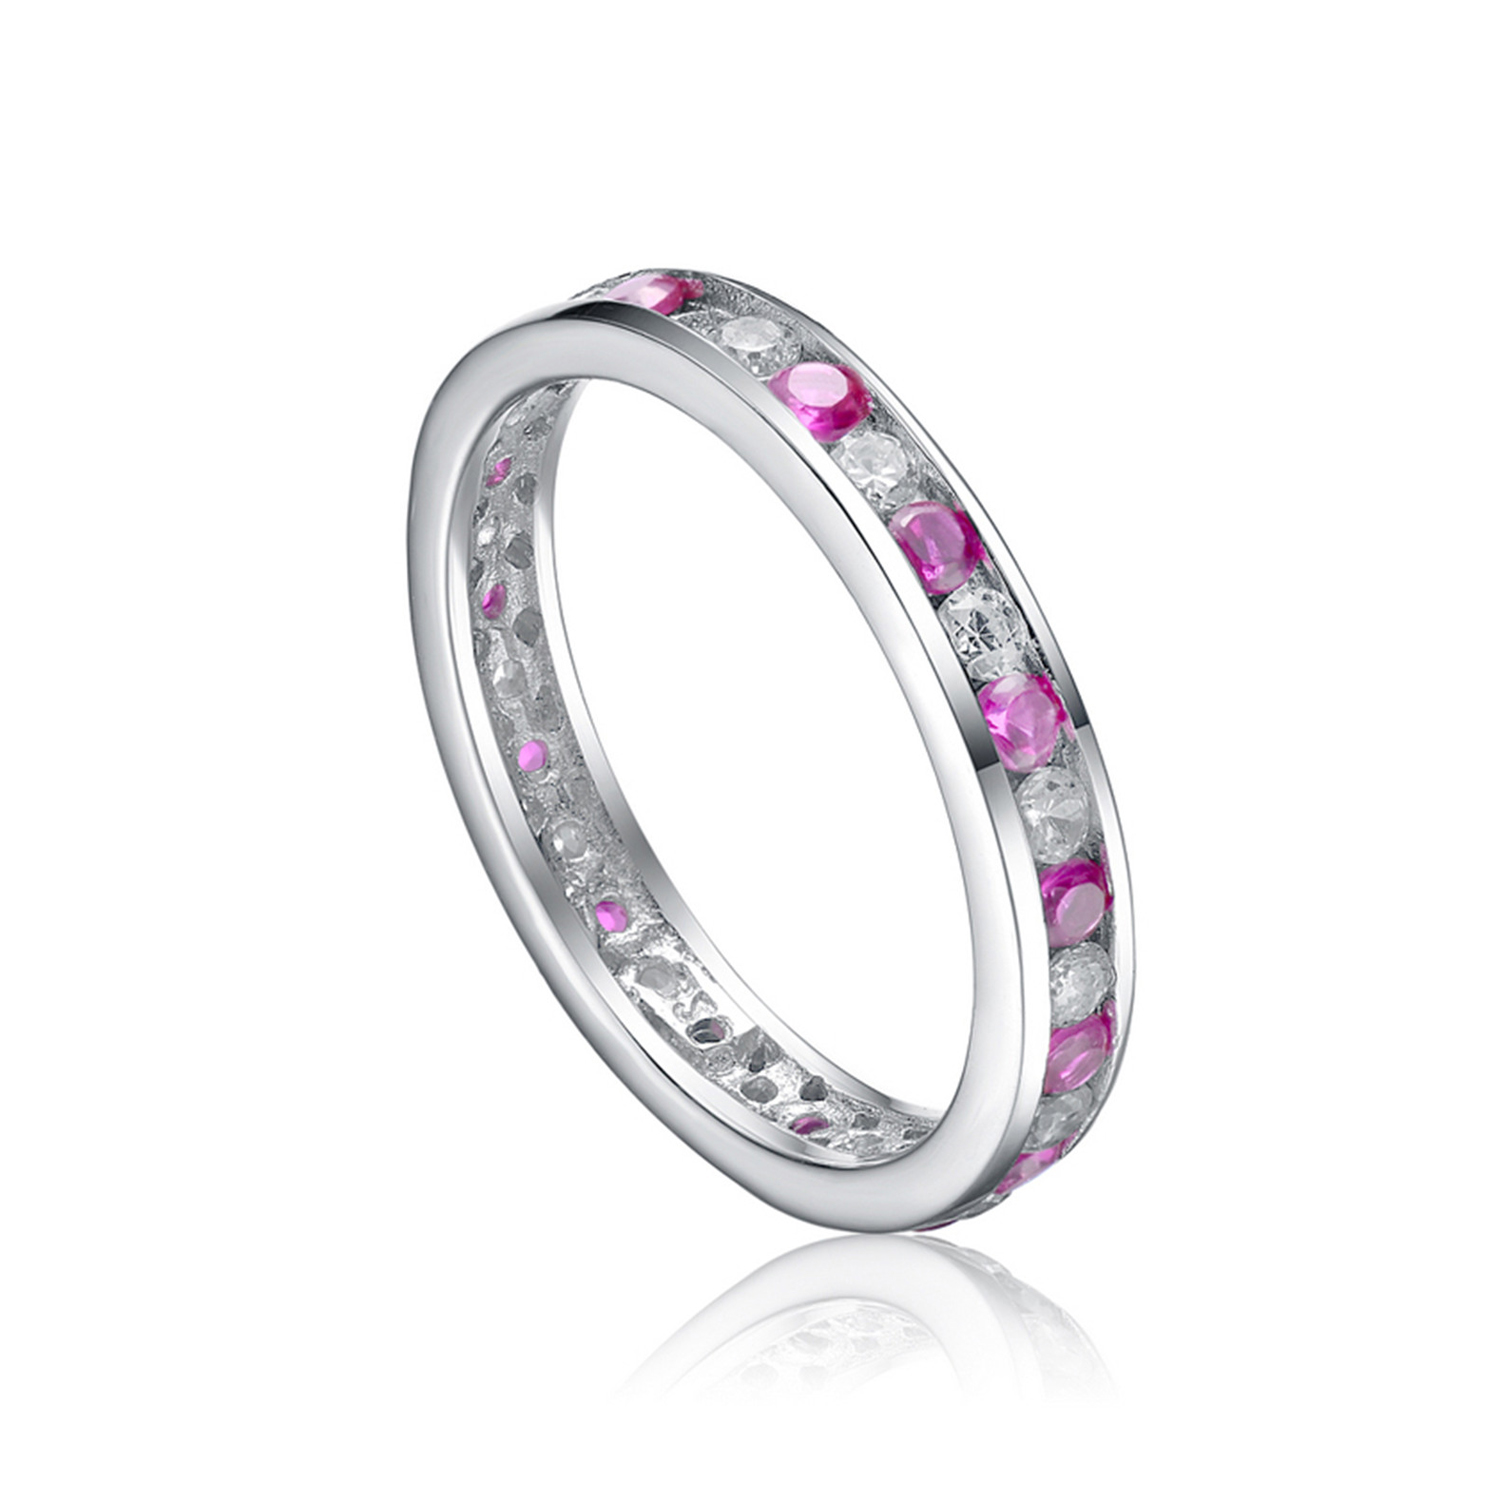 Sterling silver ring eternity wedding engagement finger ring design for women(图1)